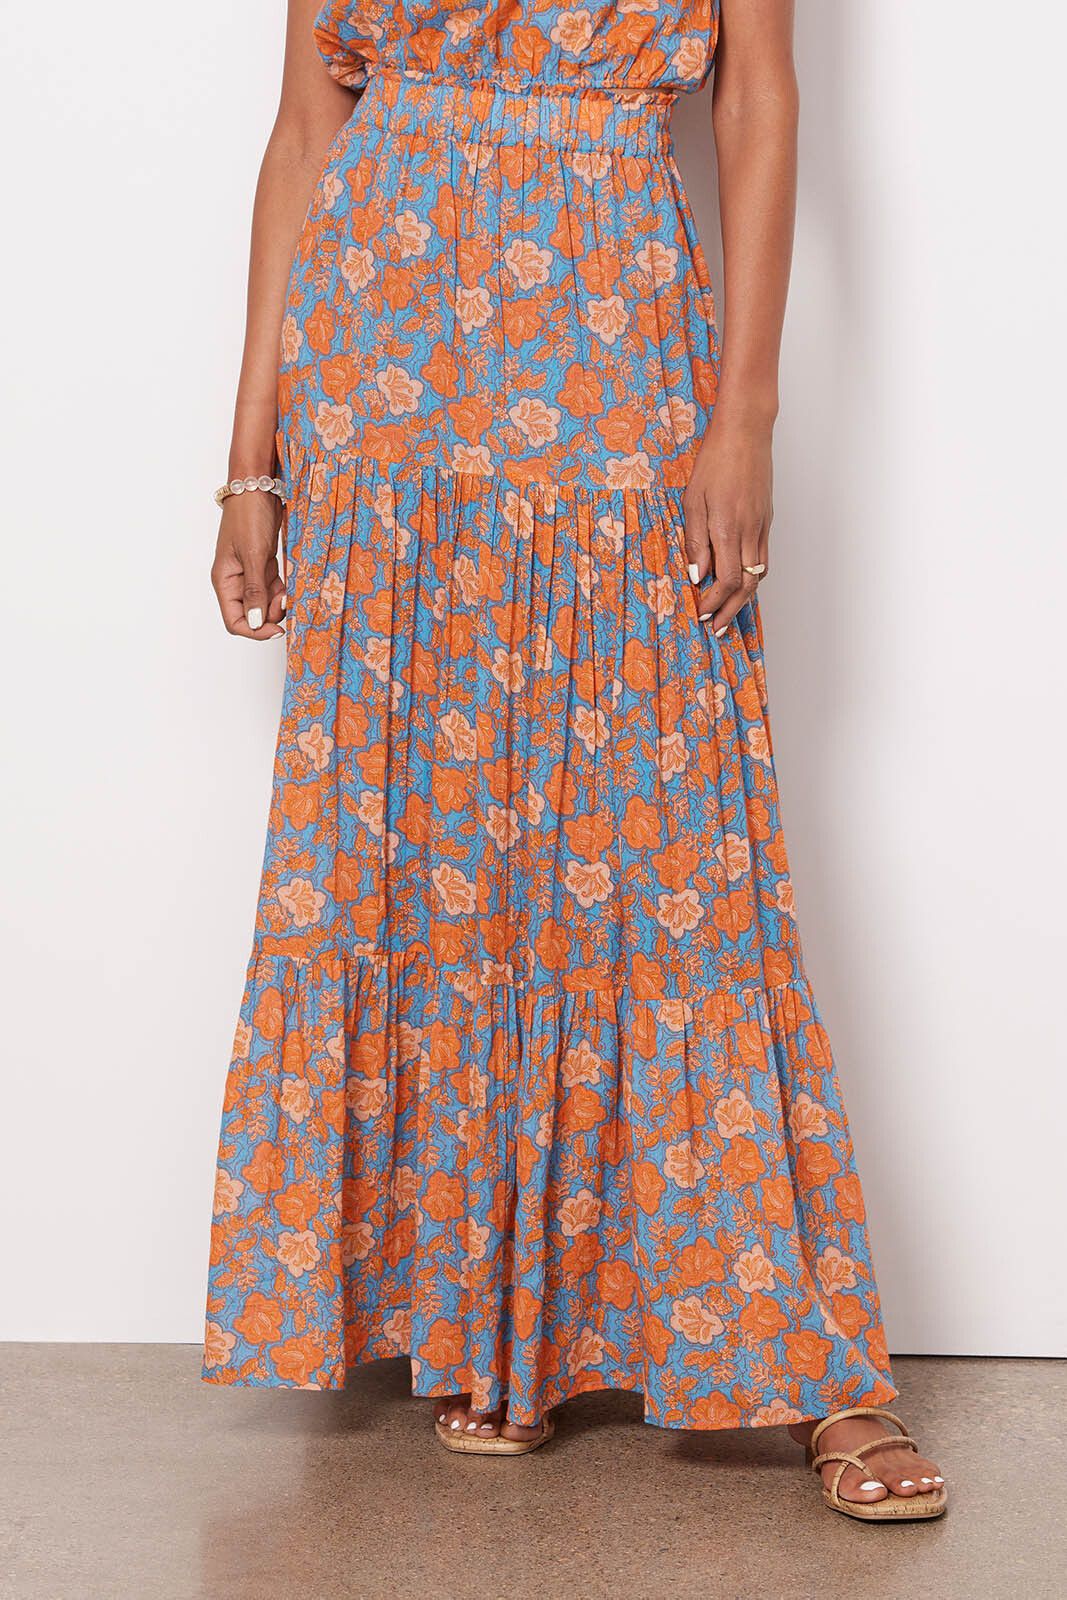 SUNDRY Saanvi Floral Skirt | EVEREVE | Evereve